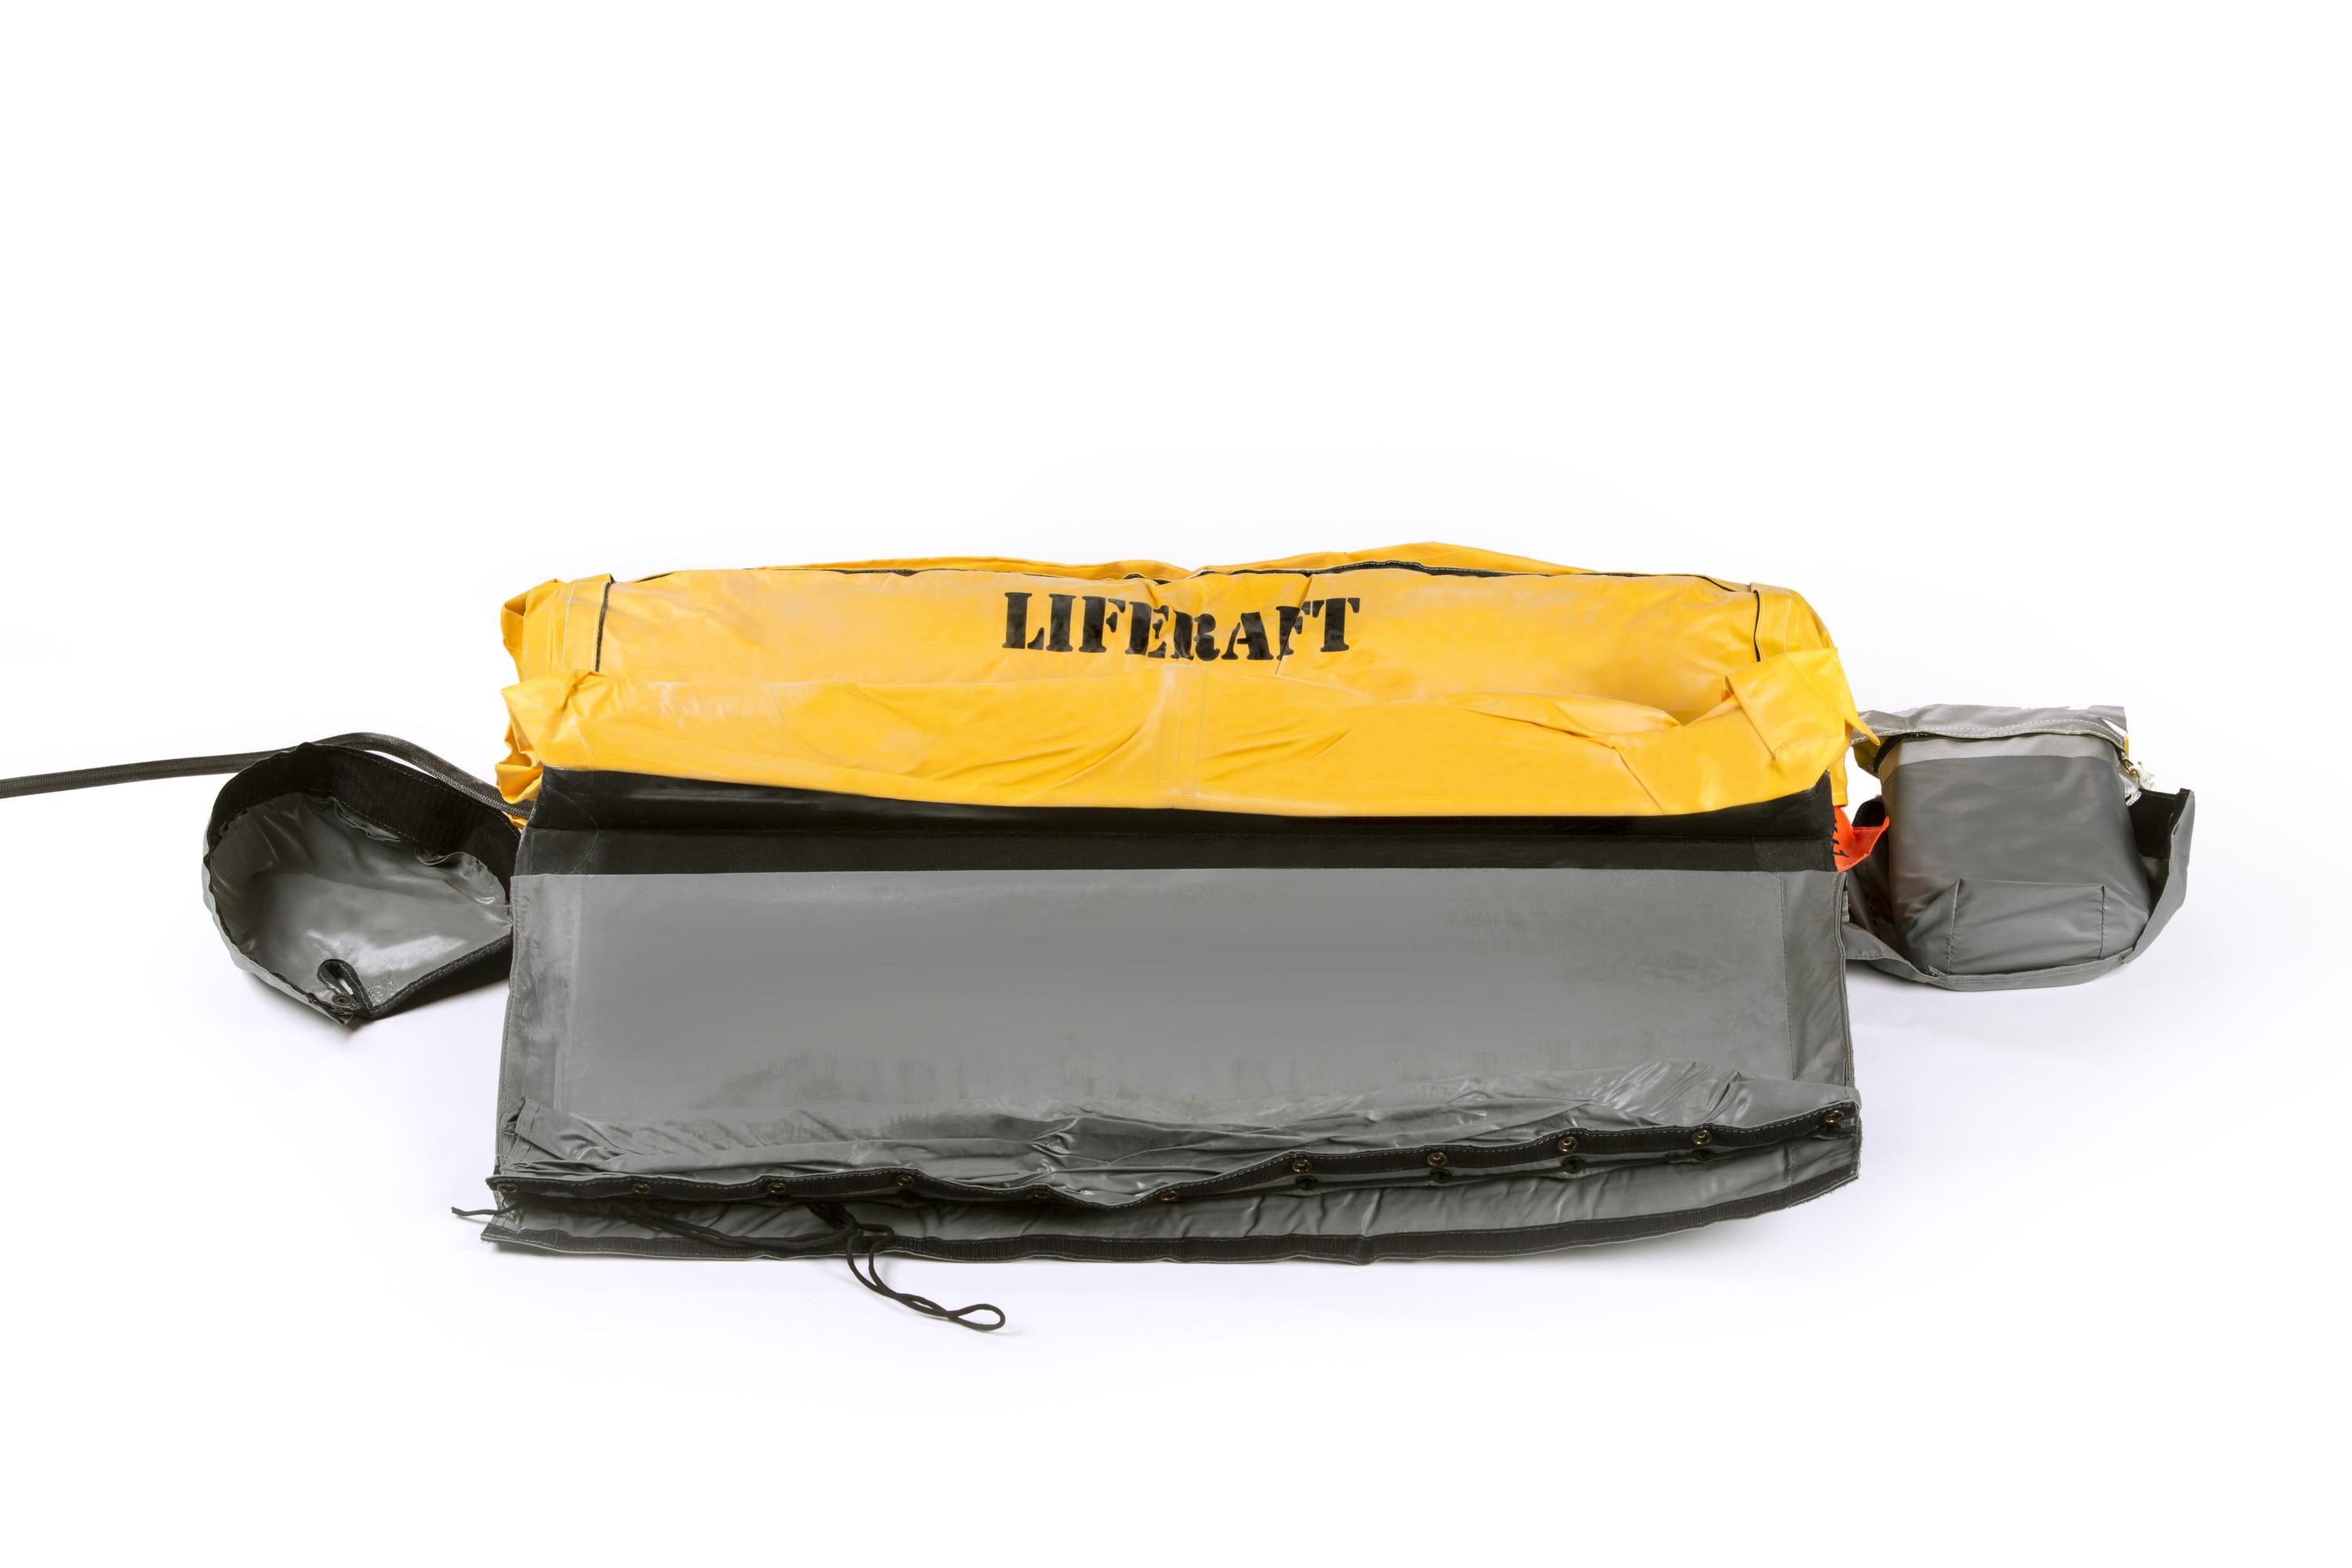 407 tri-bag float system with liferaft